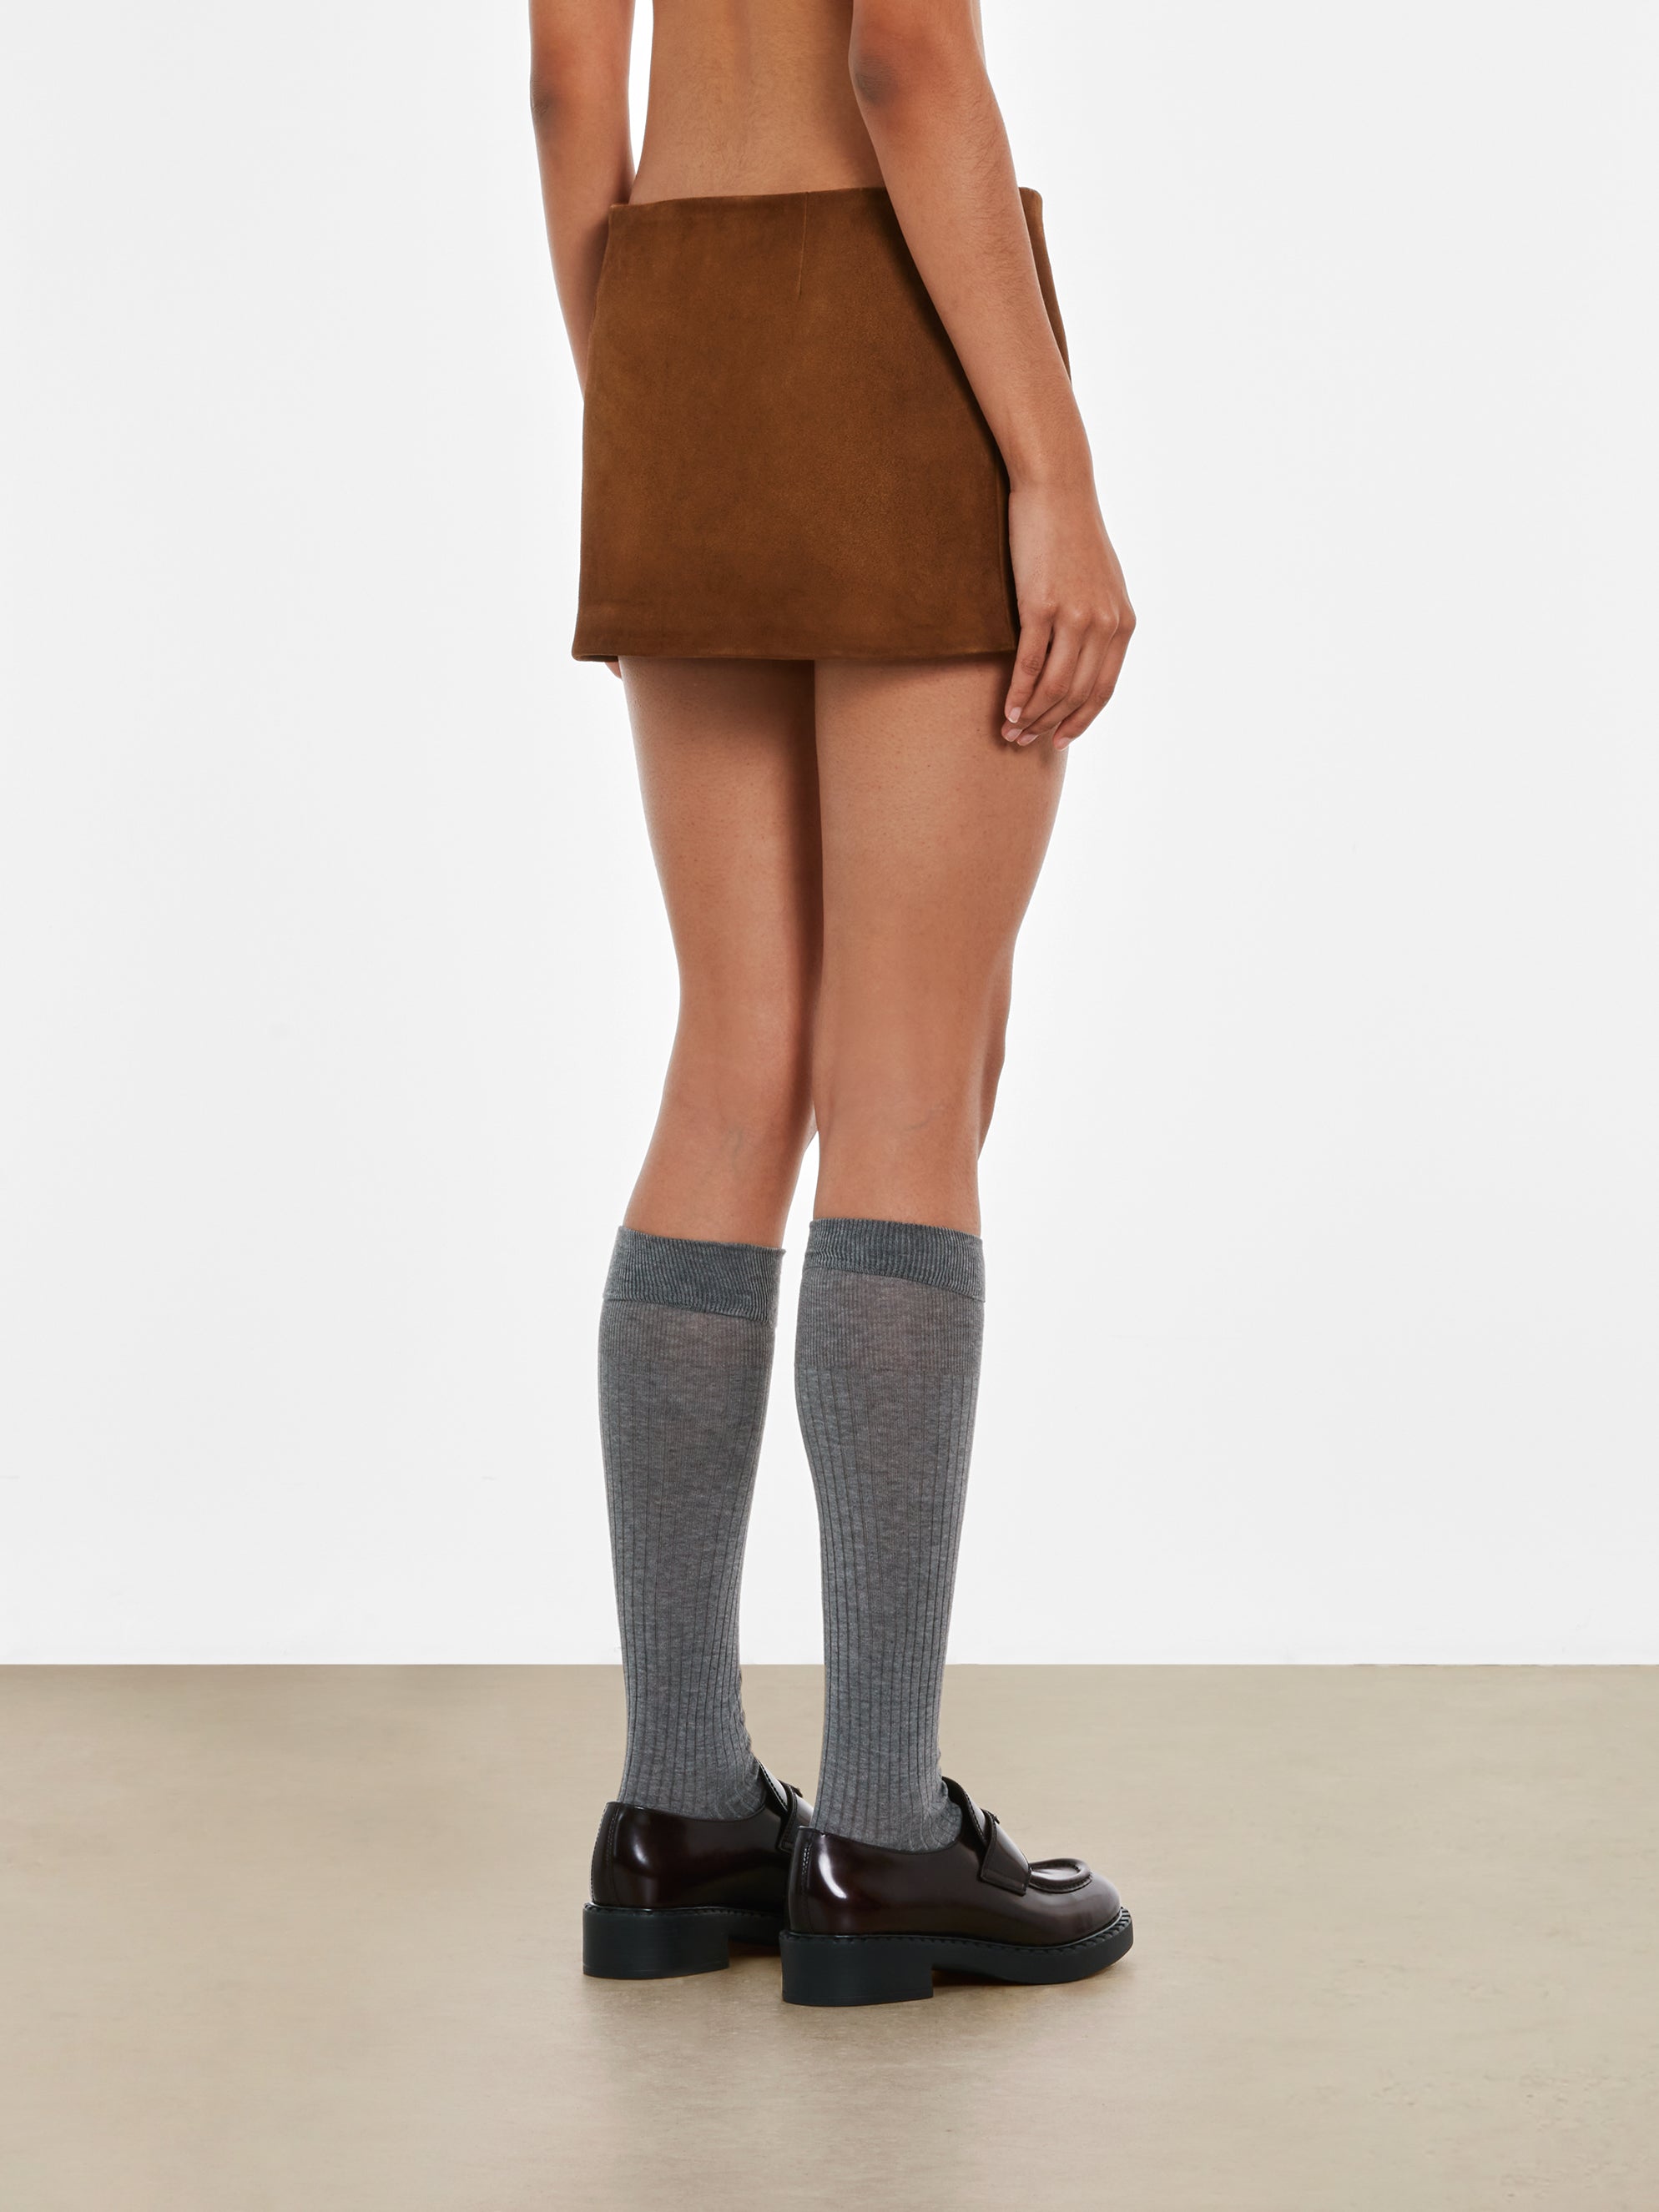 Prada - Women’s Leather Skirt - (Brown) view 3